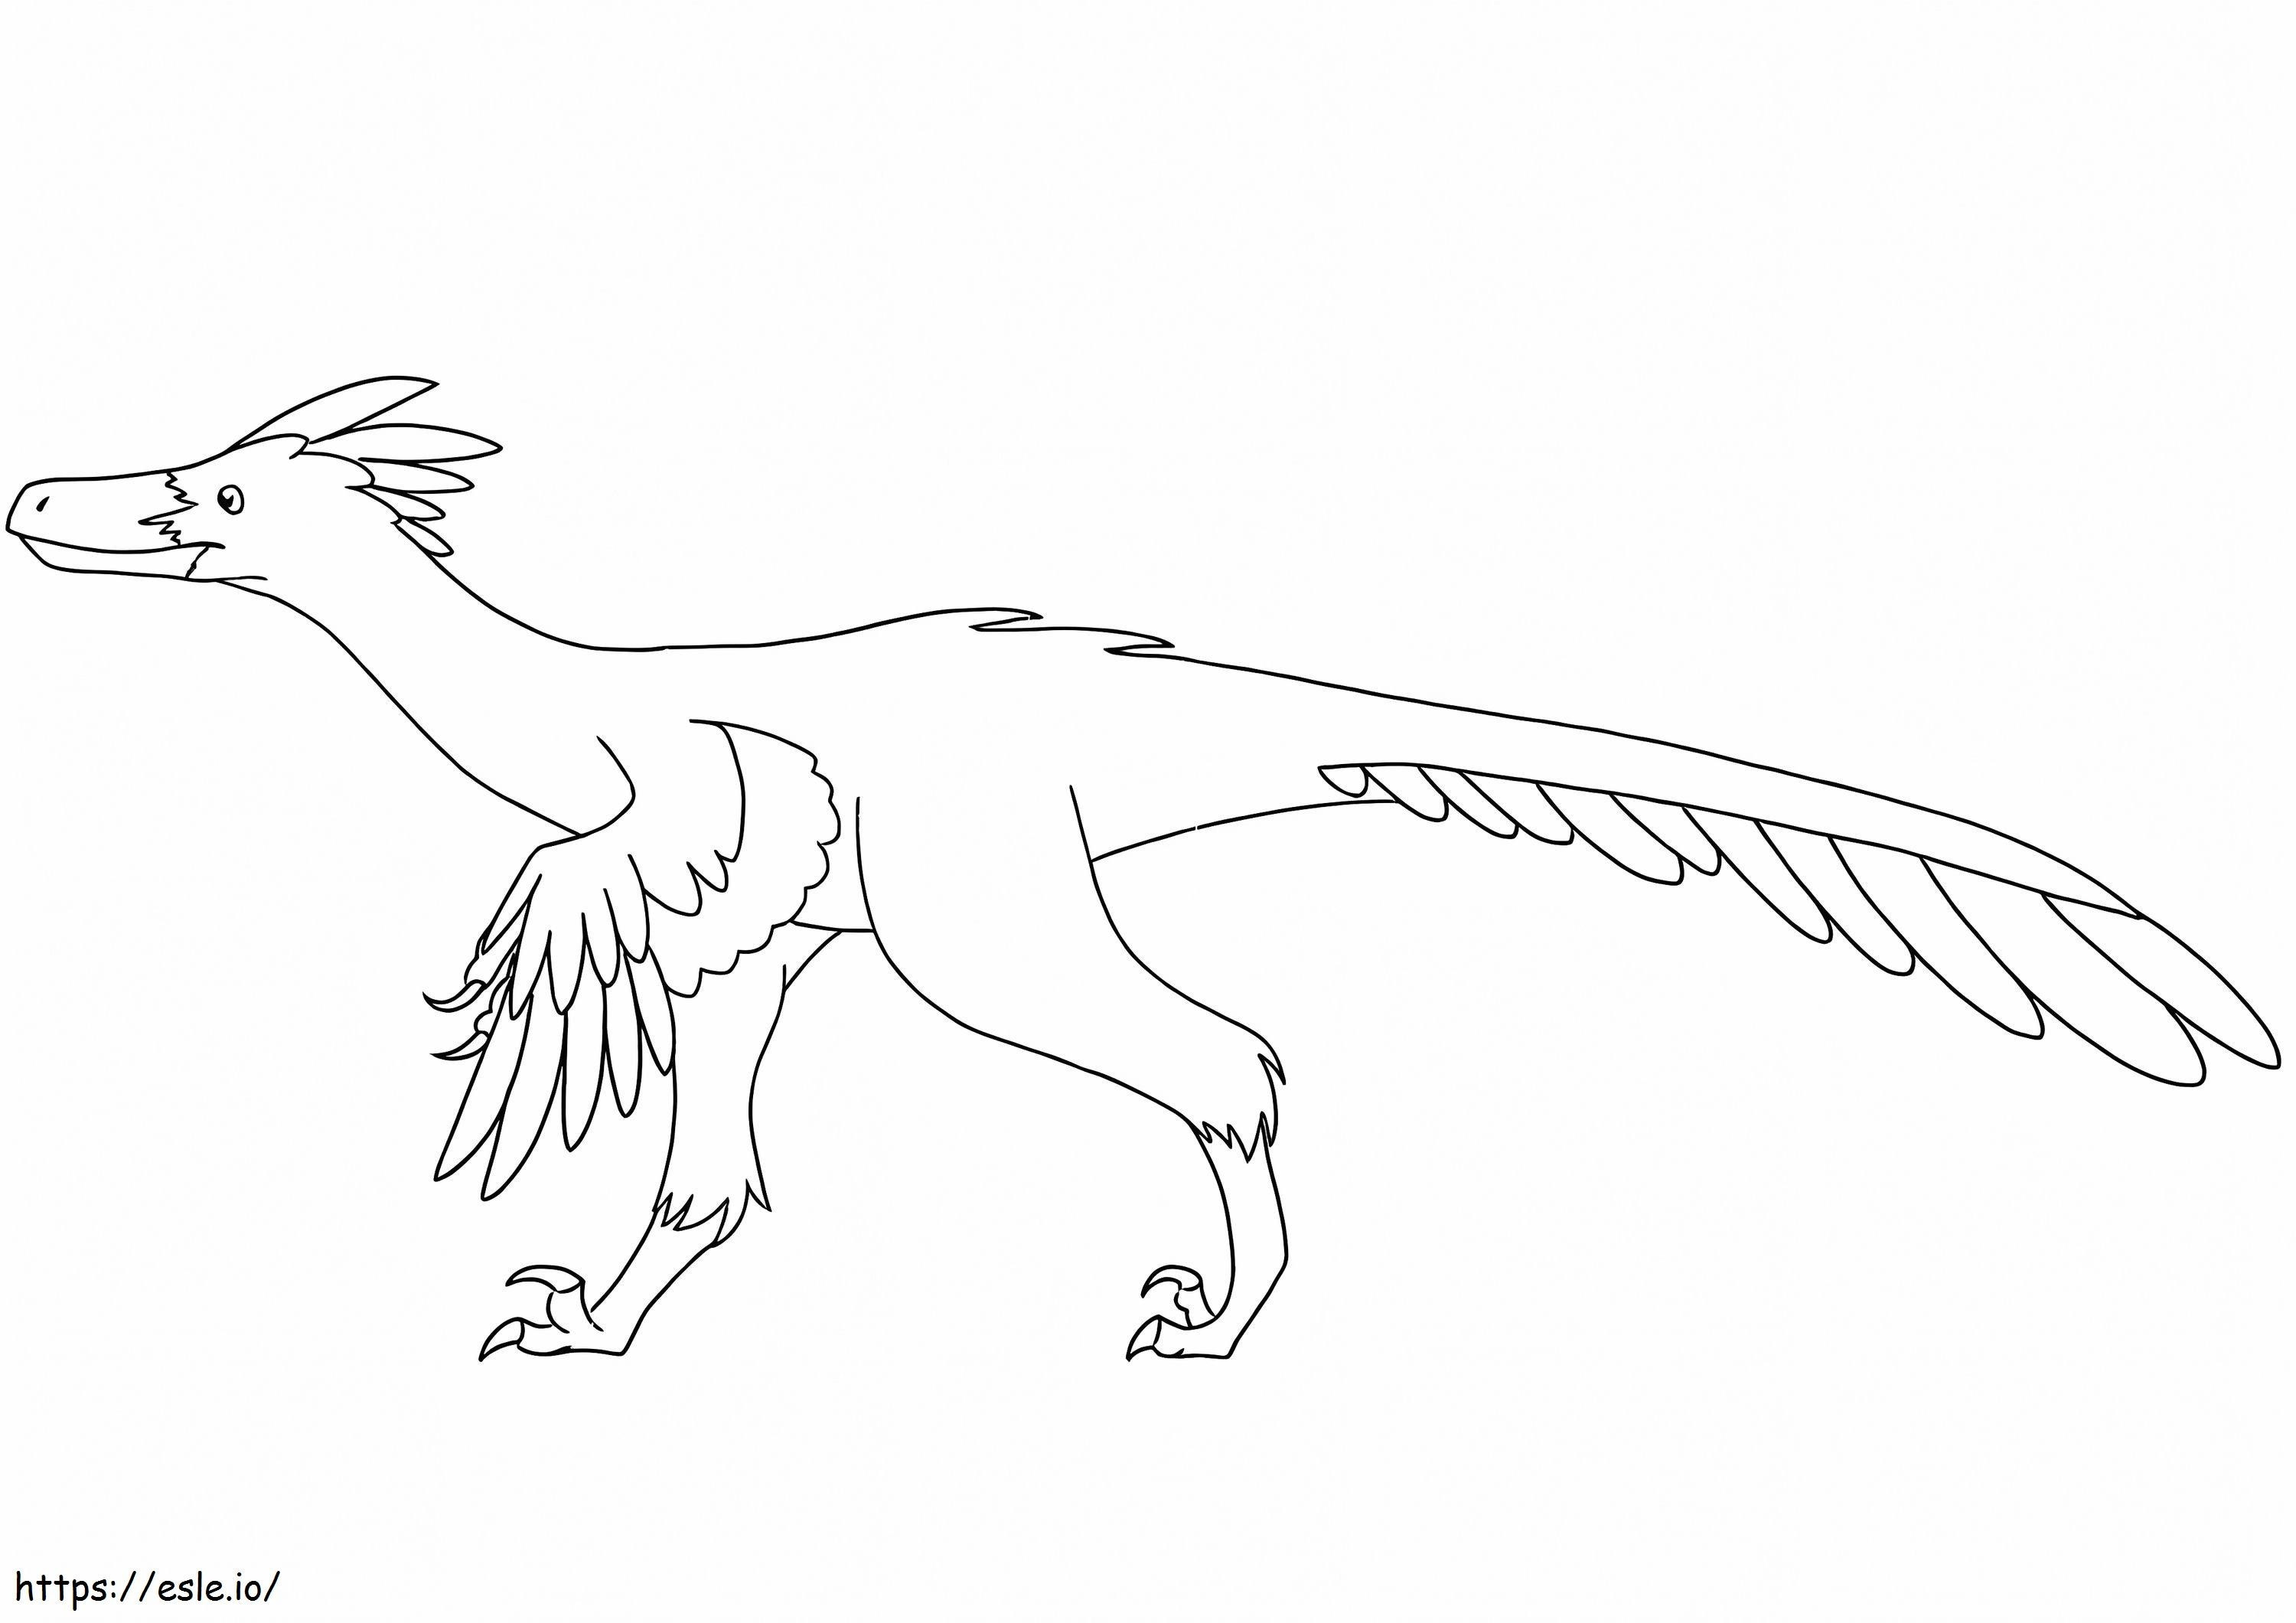 Velociraptor 1 coloring page